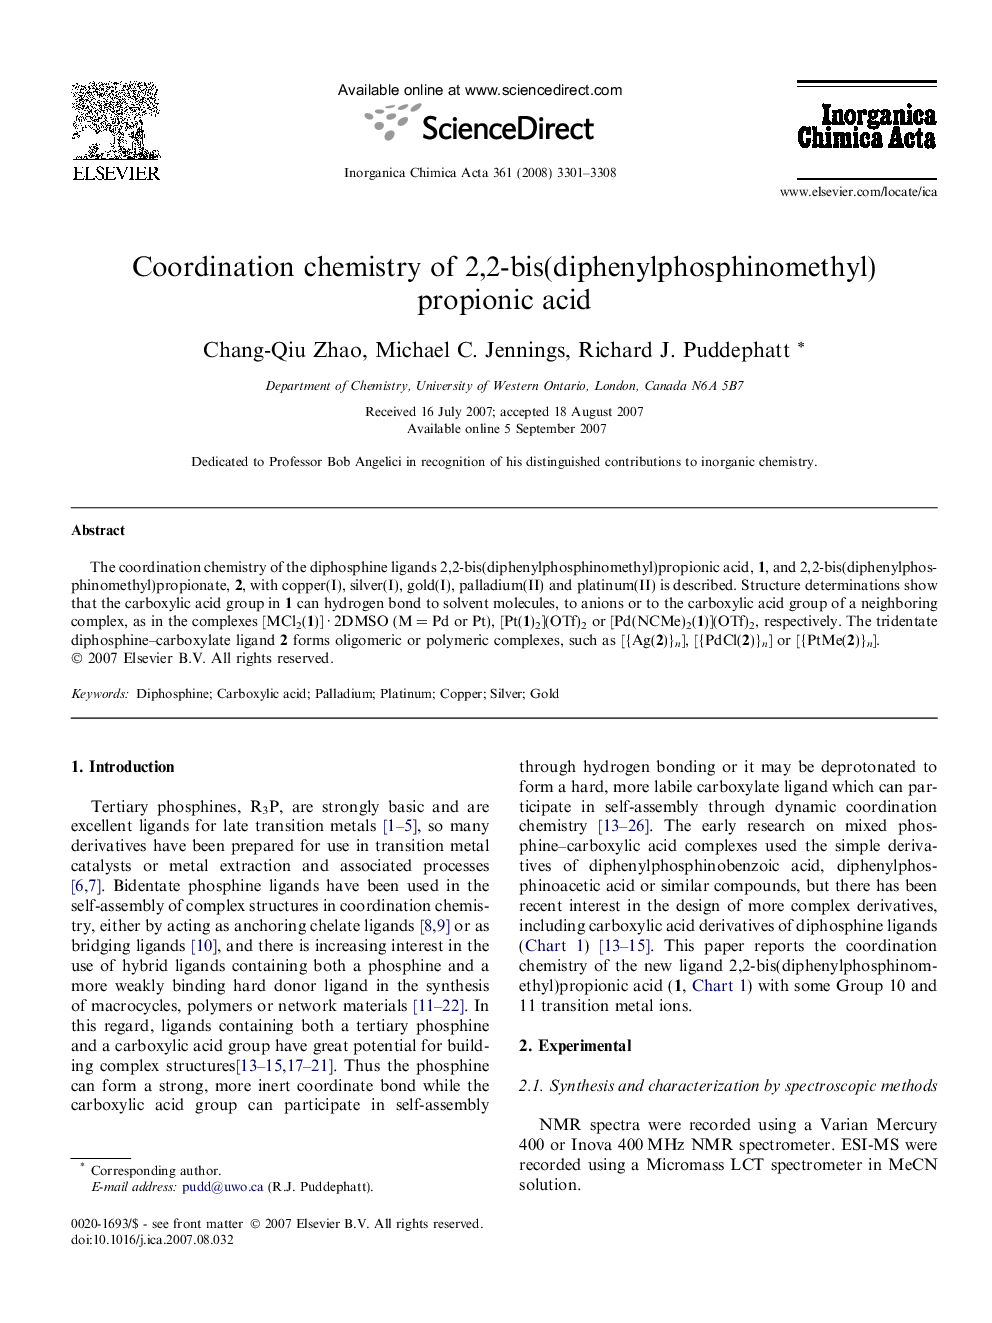 Coordination chemistry of 2,2-bis(diphenylphosphinomethyl)propionic acid